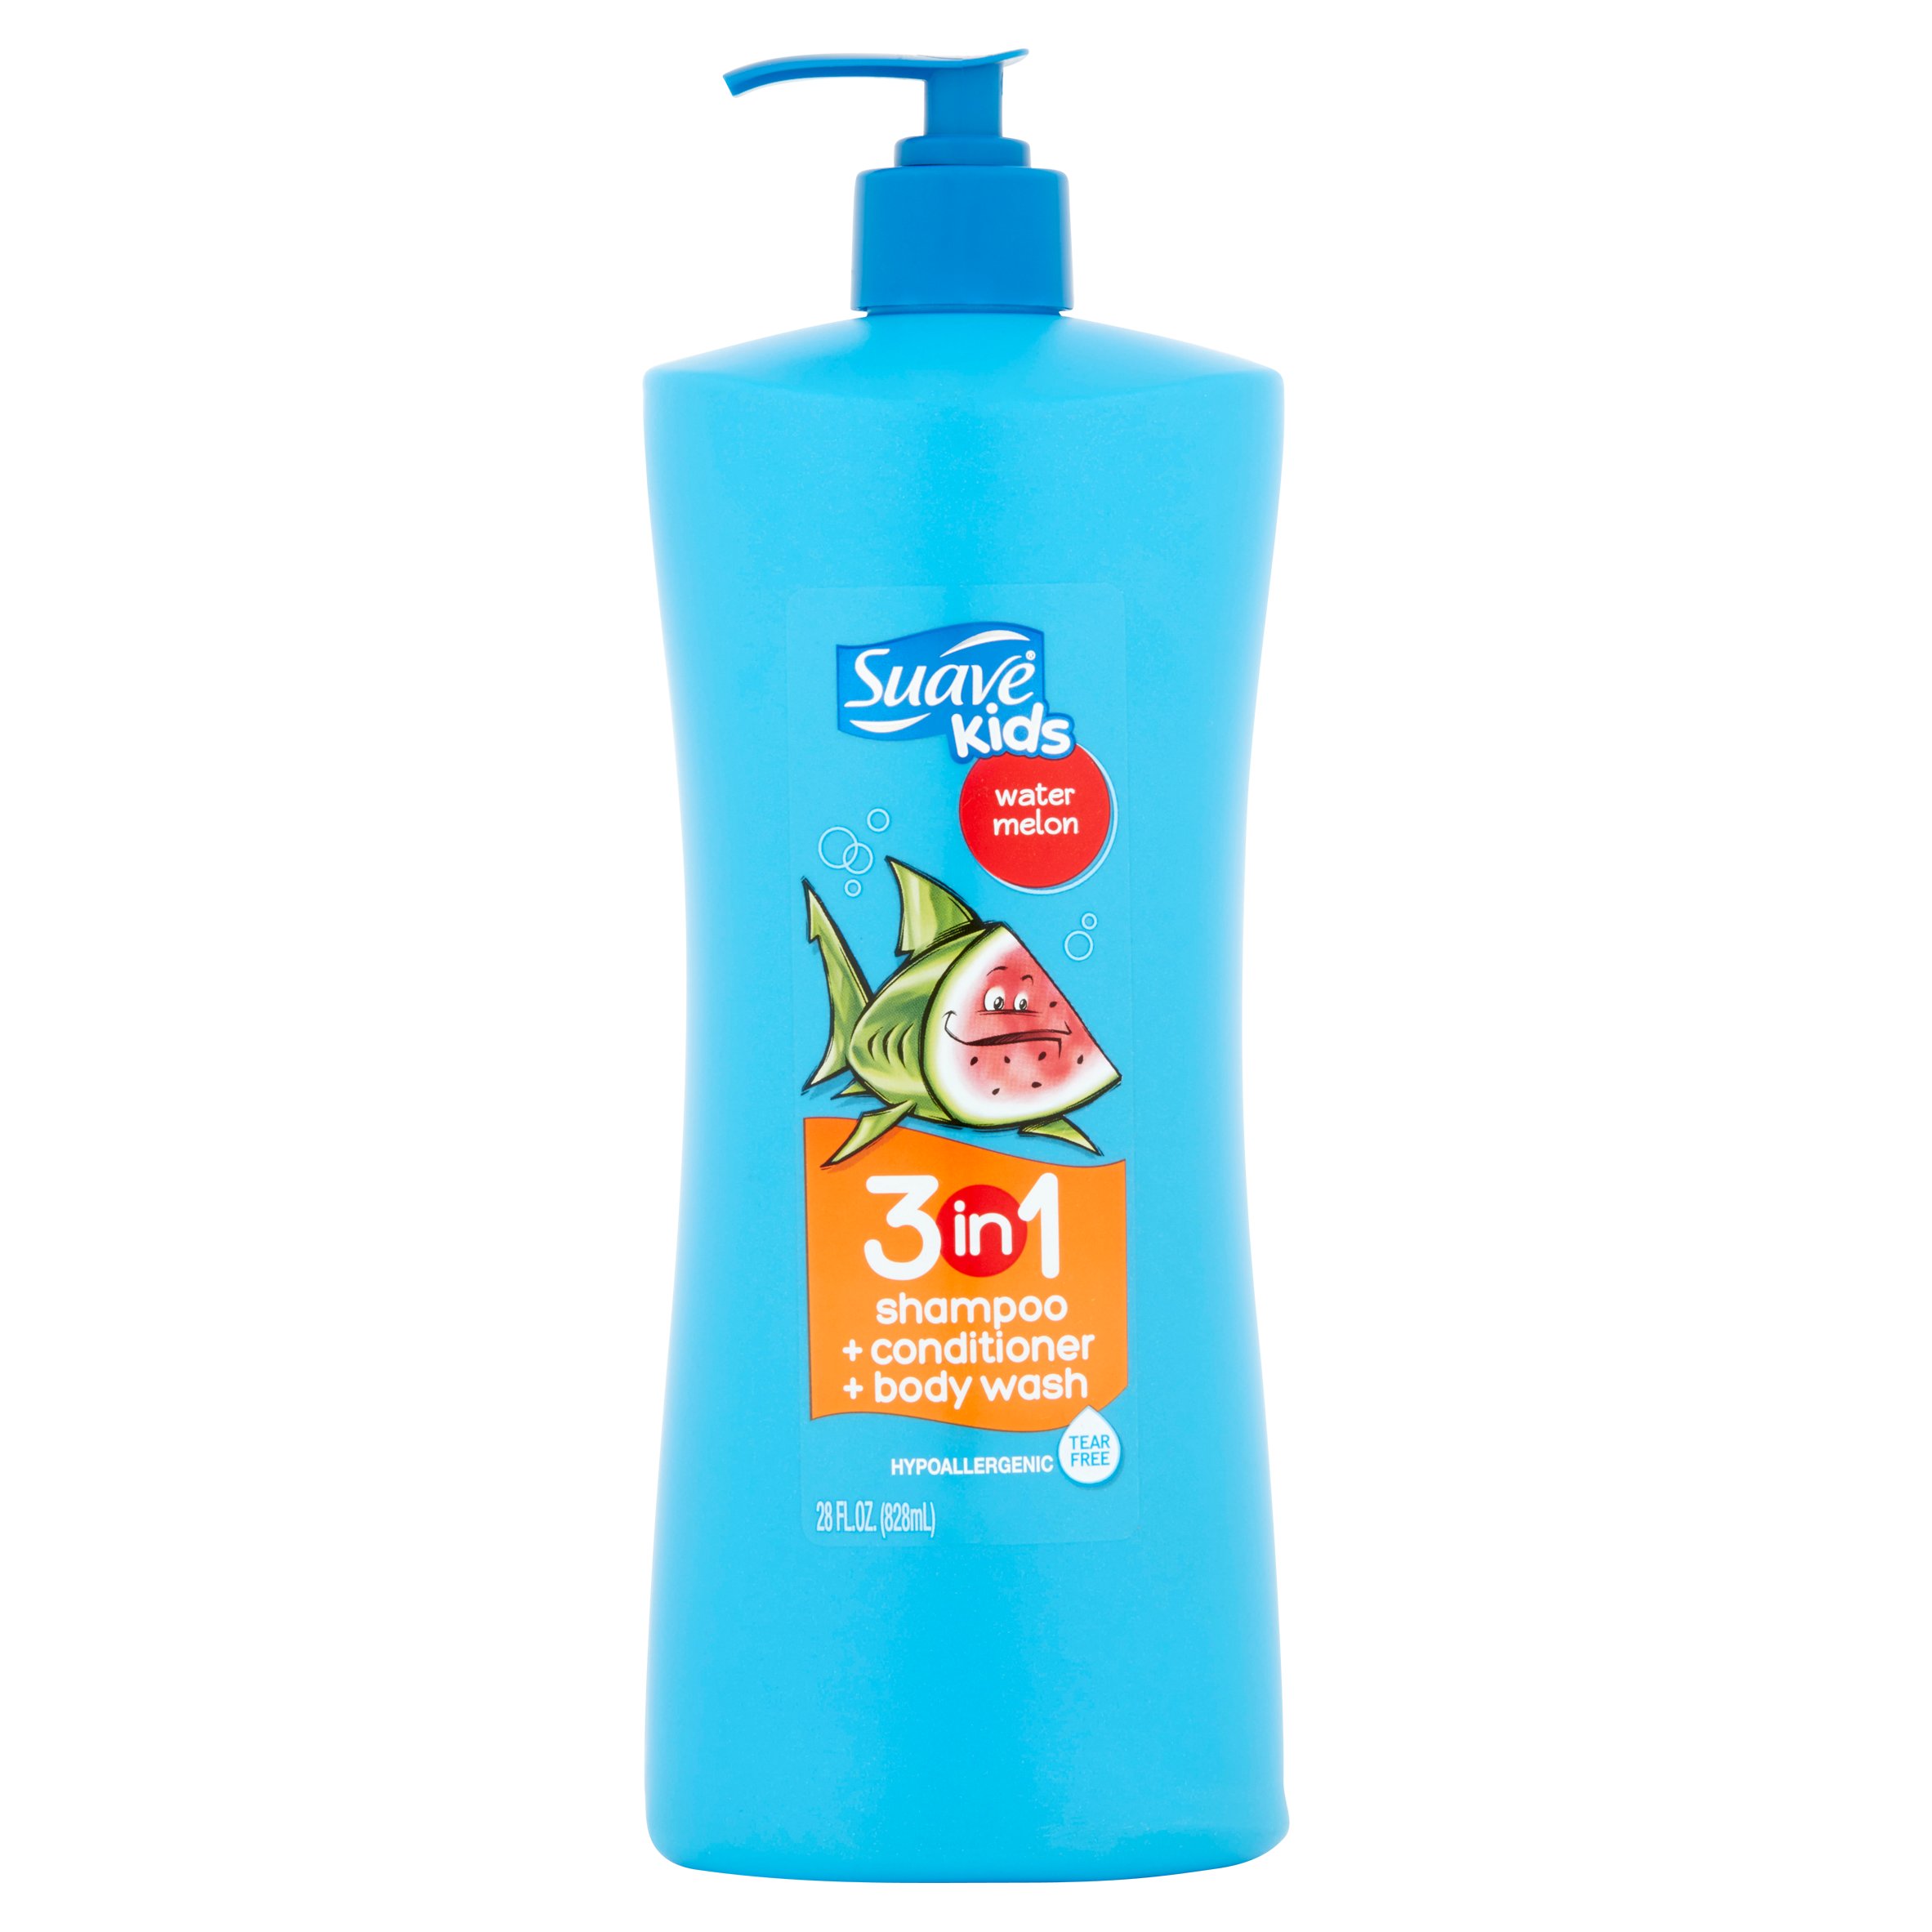 Suave Kids Water Melon 3 in 1 Shampoo + Conditioner + Body Wash, 28 fl oz - image 1 of 4